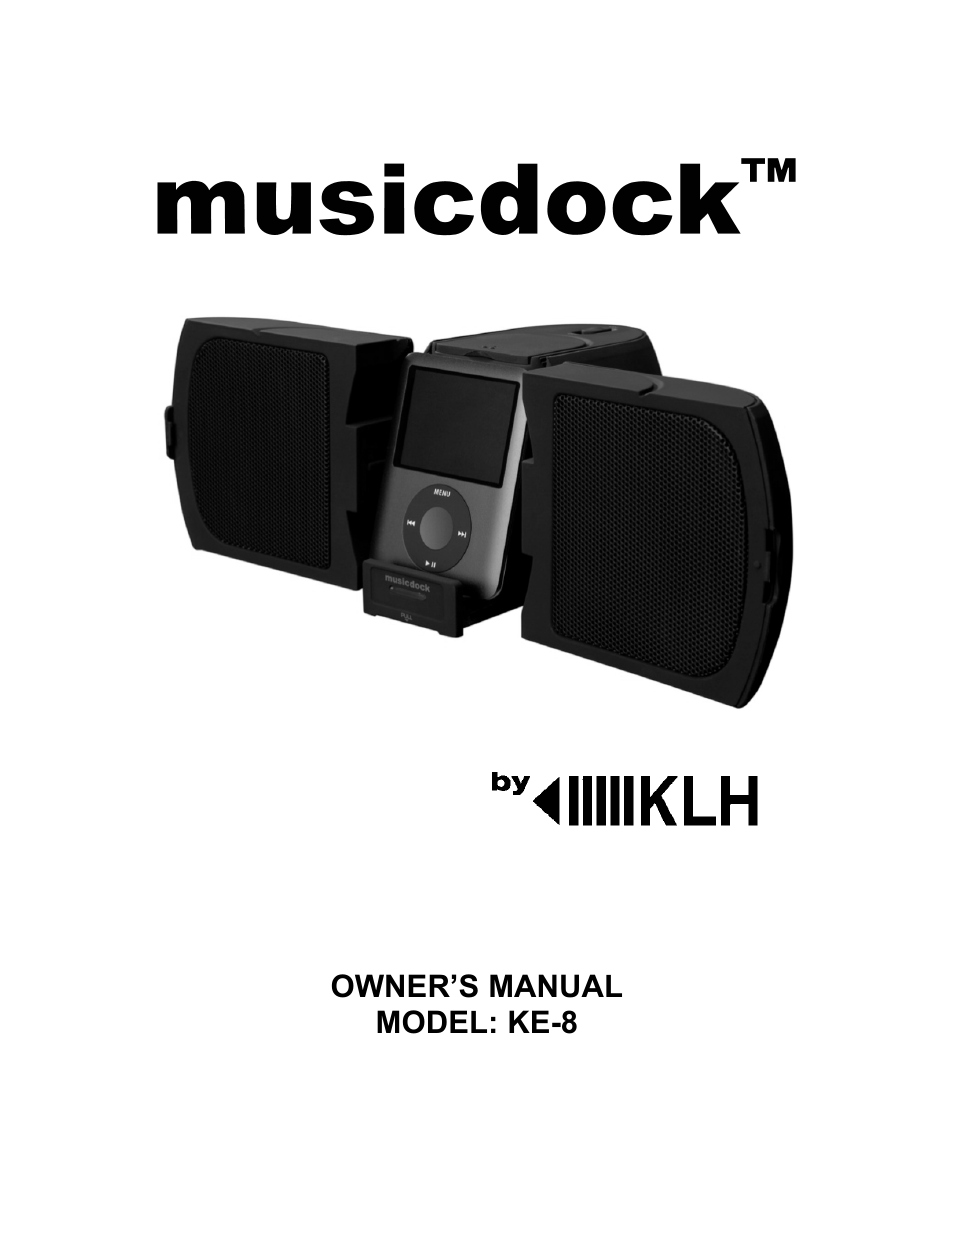 MUSICDOCK KE-8